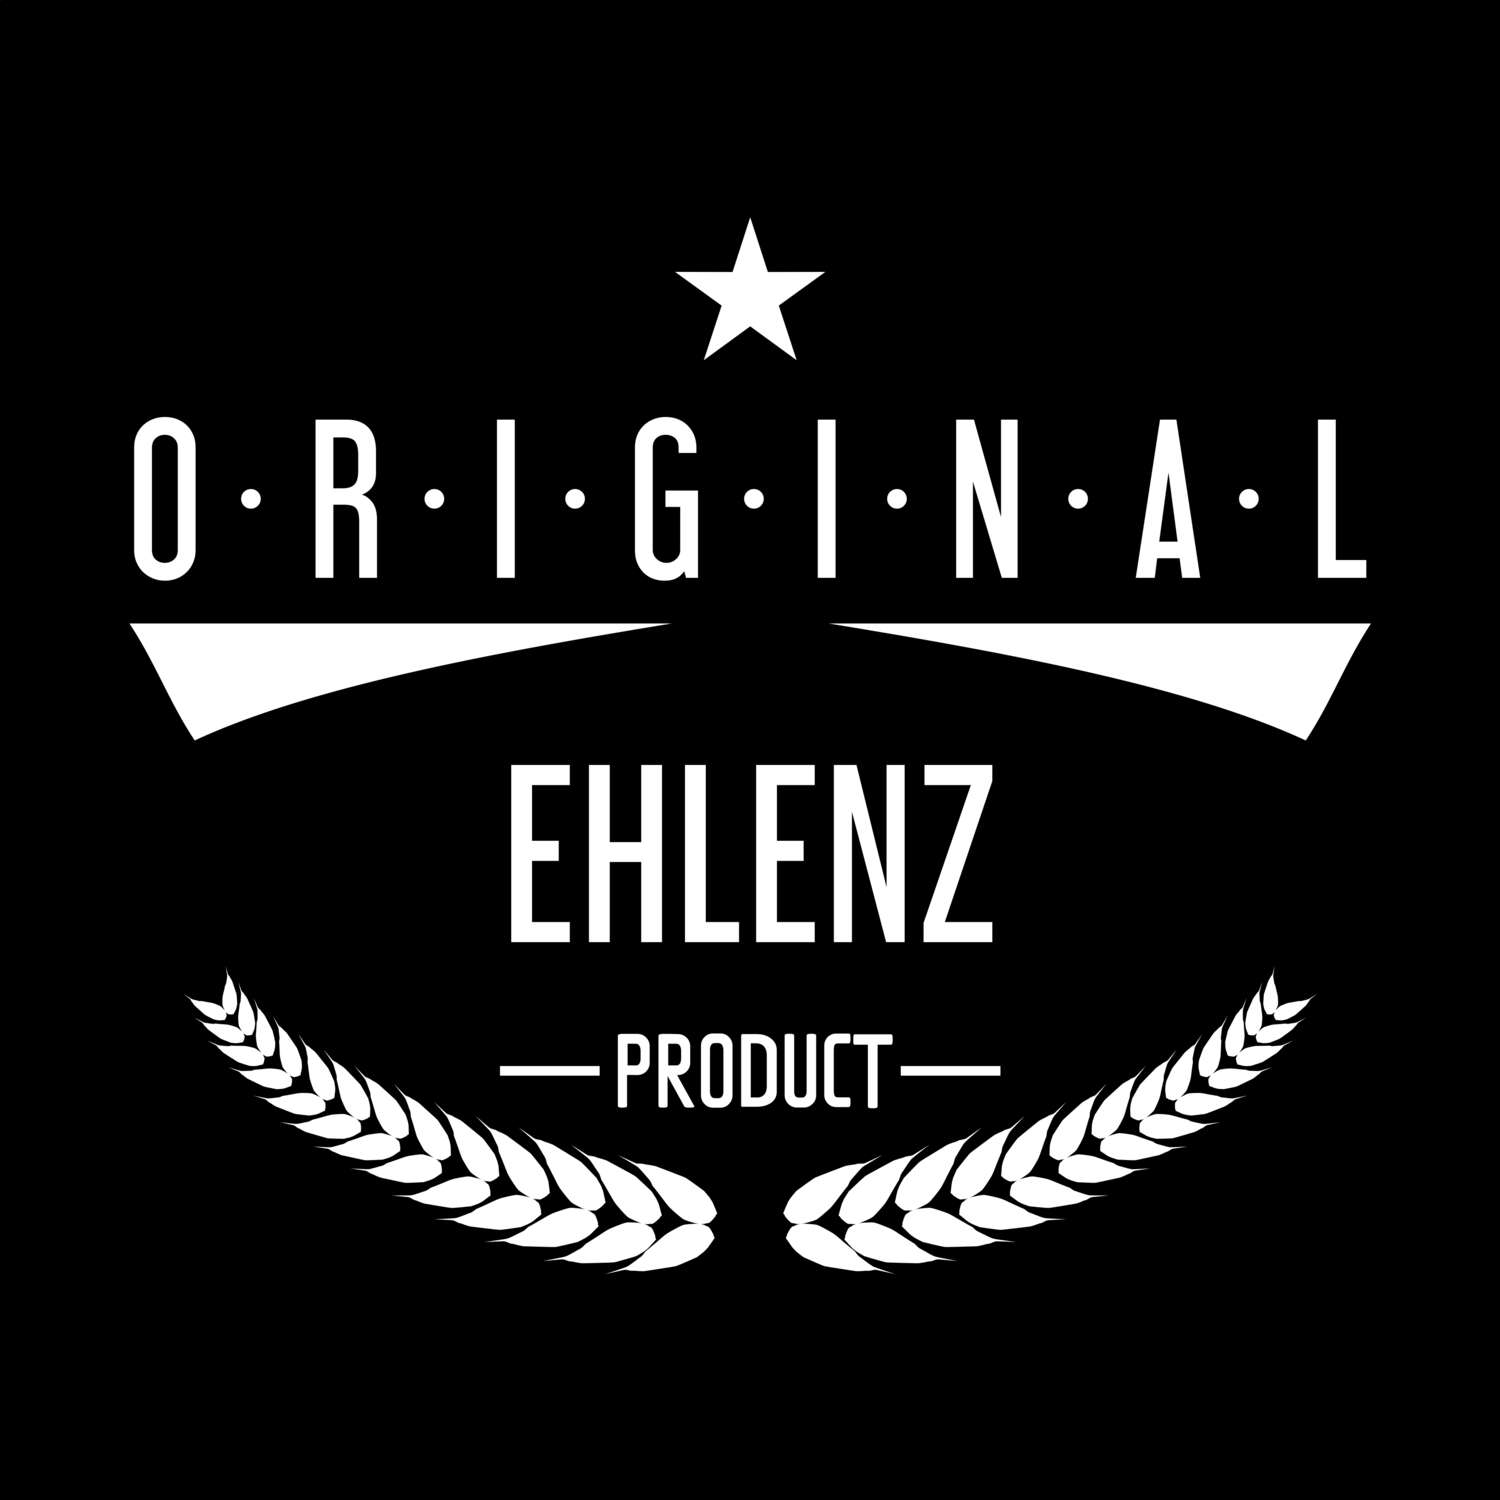 Ehlenz T-Shirt »Original Product«